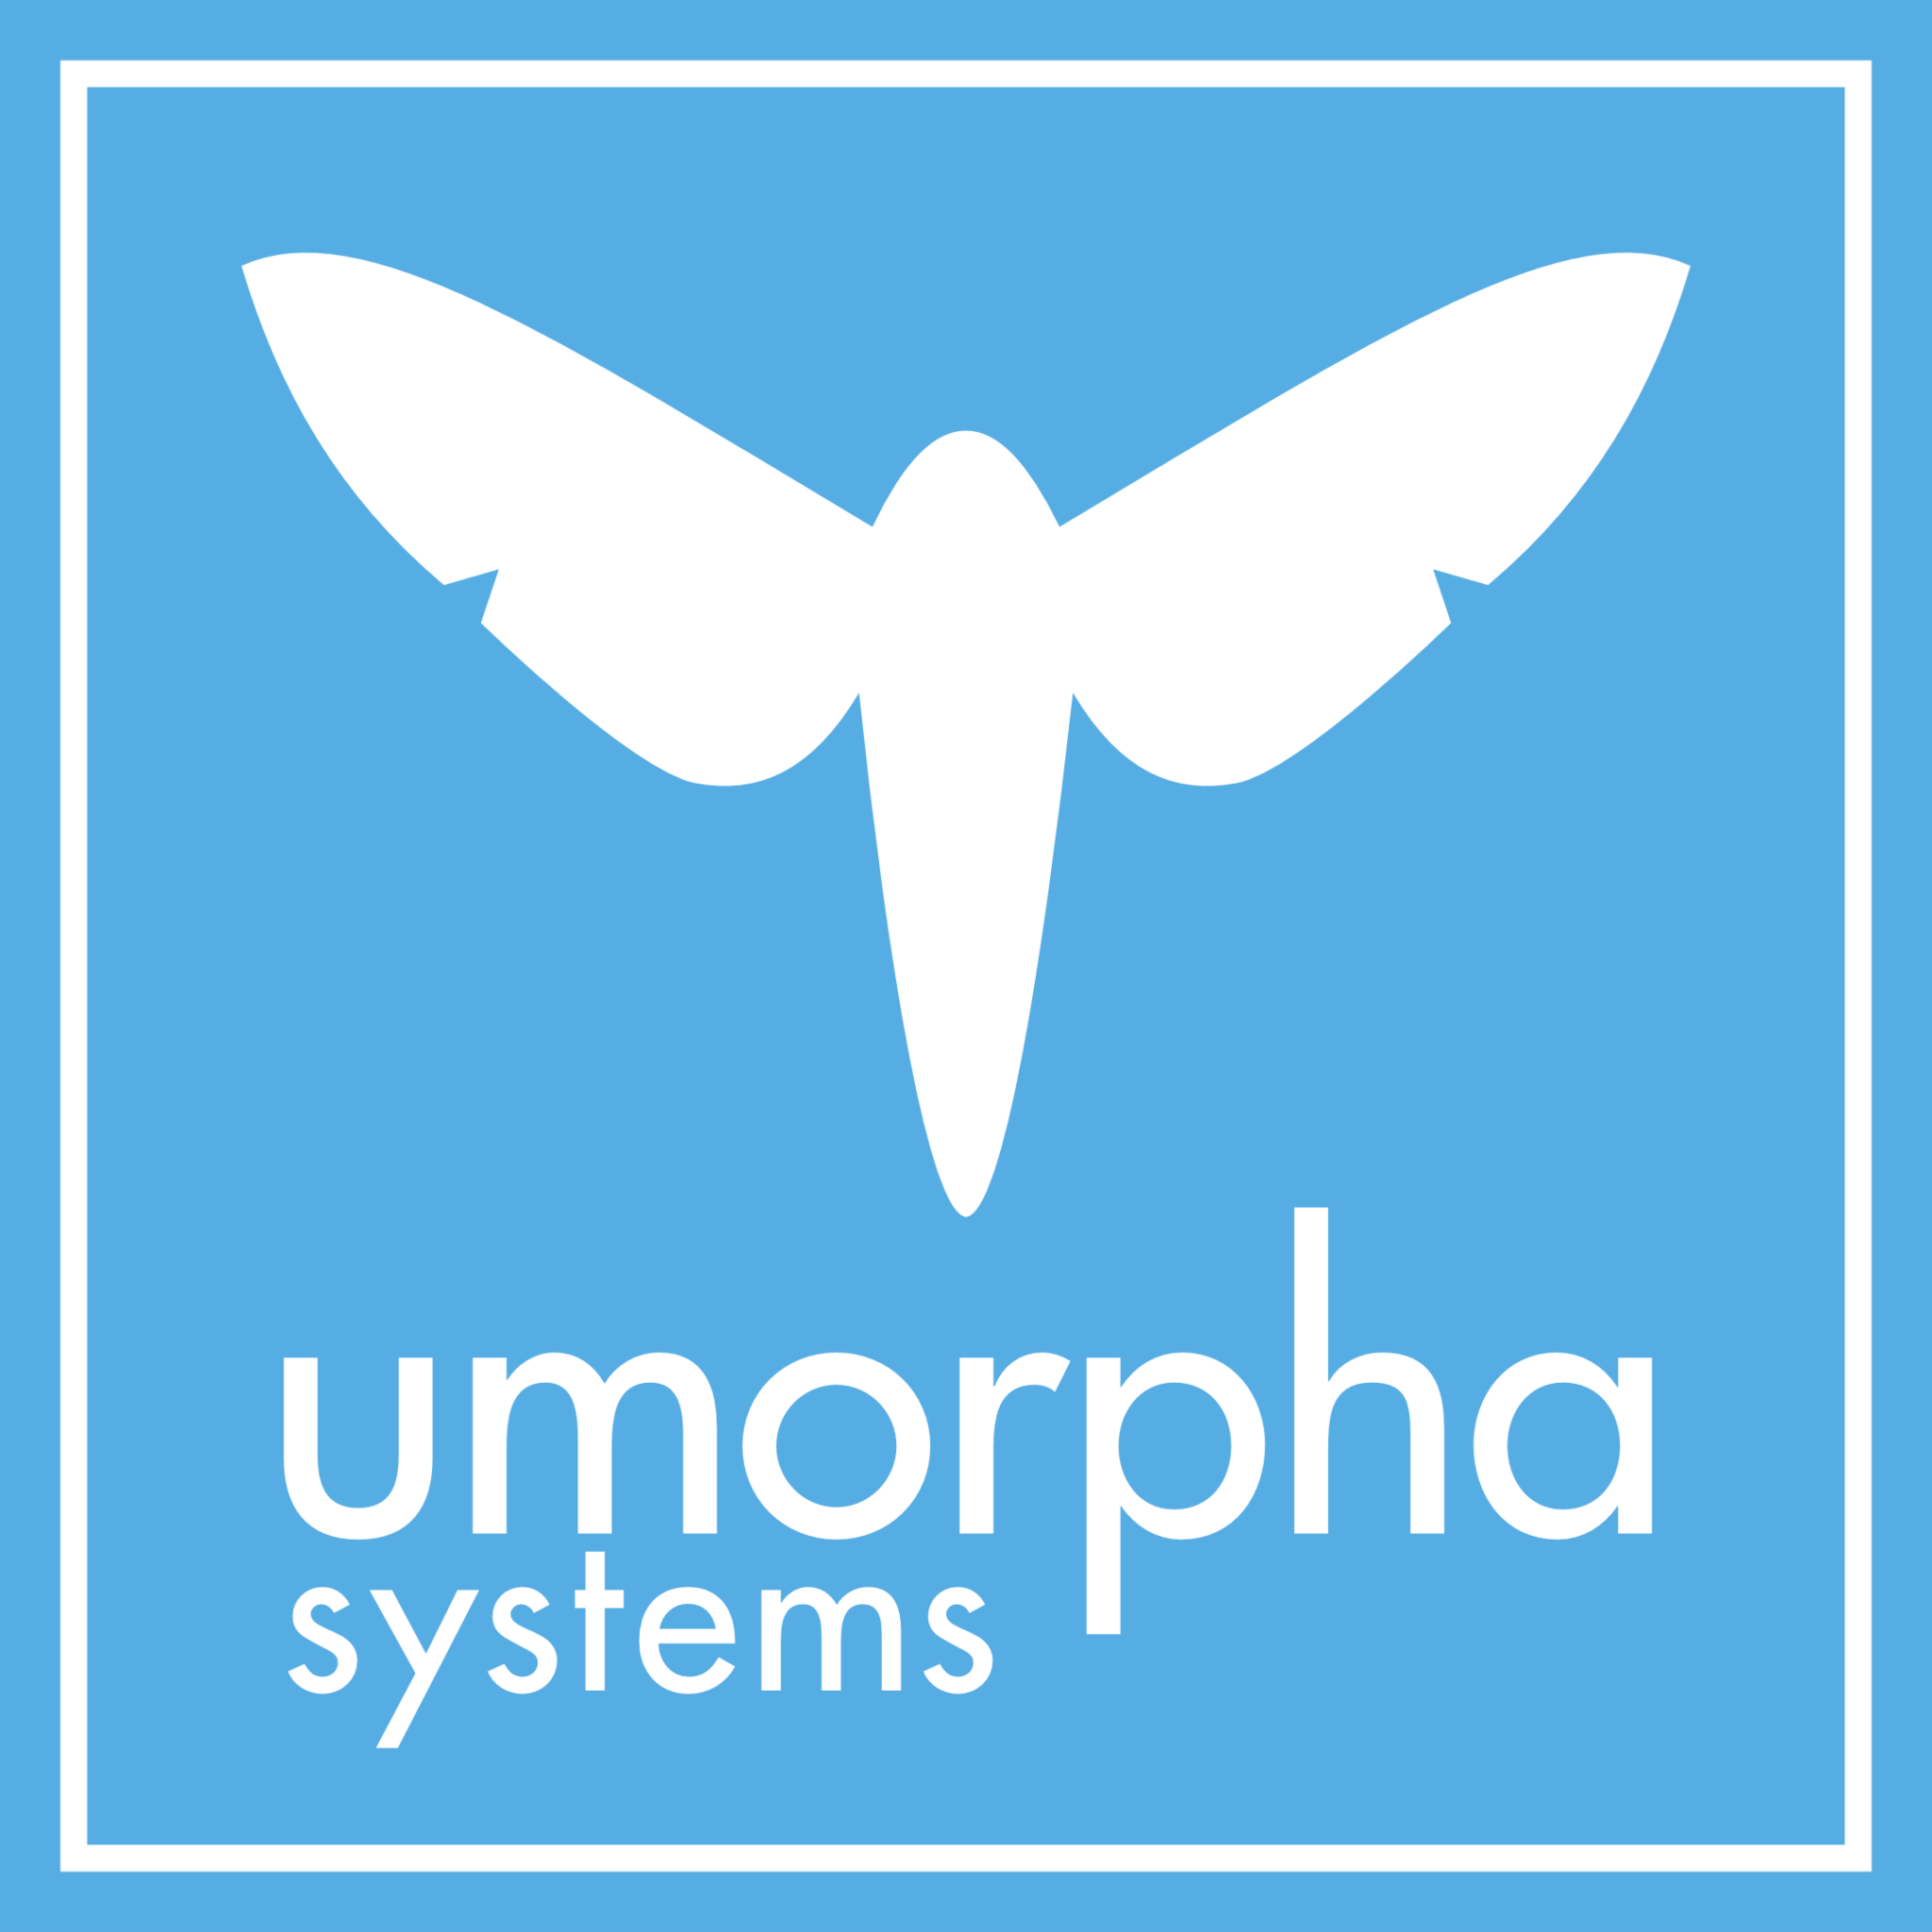 umorpha systems logo